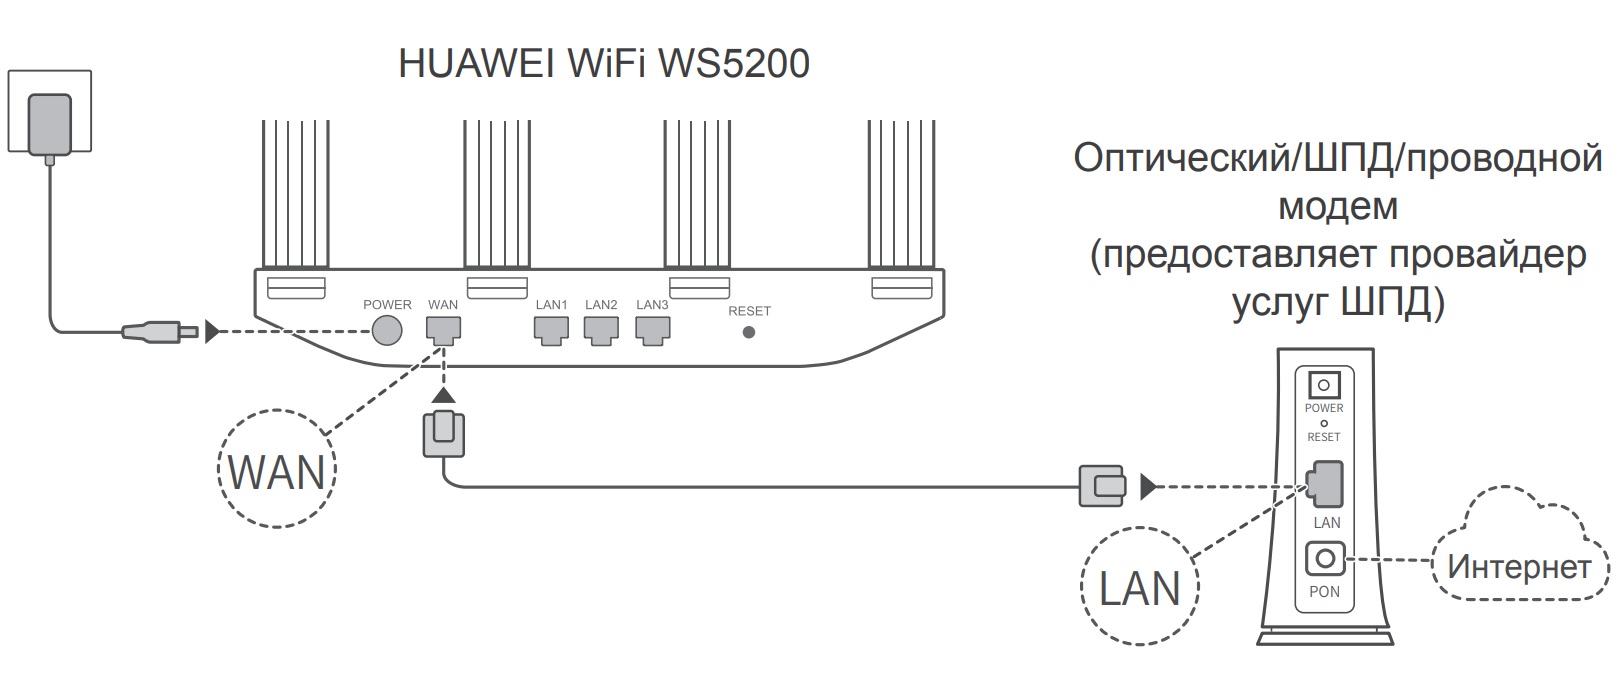 Huawei - настройка роутера для создания домашней сети WiFi - Huawei Devices